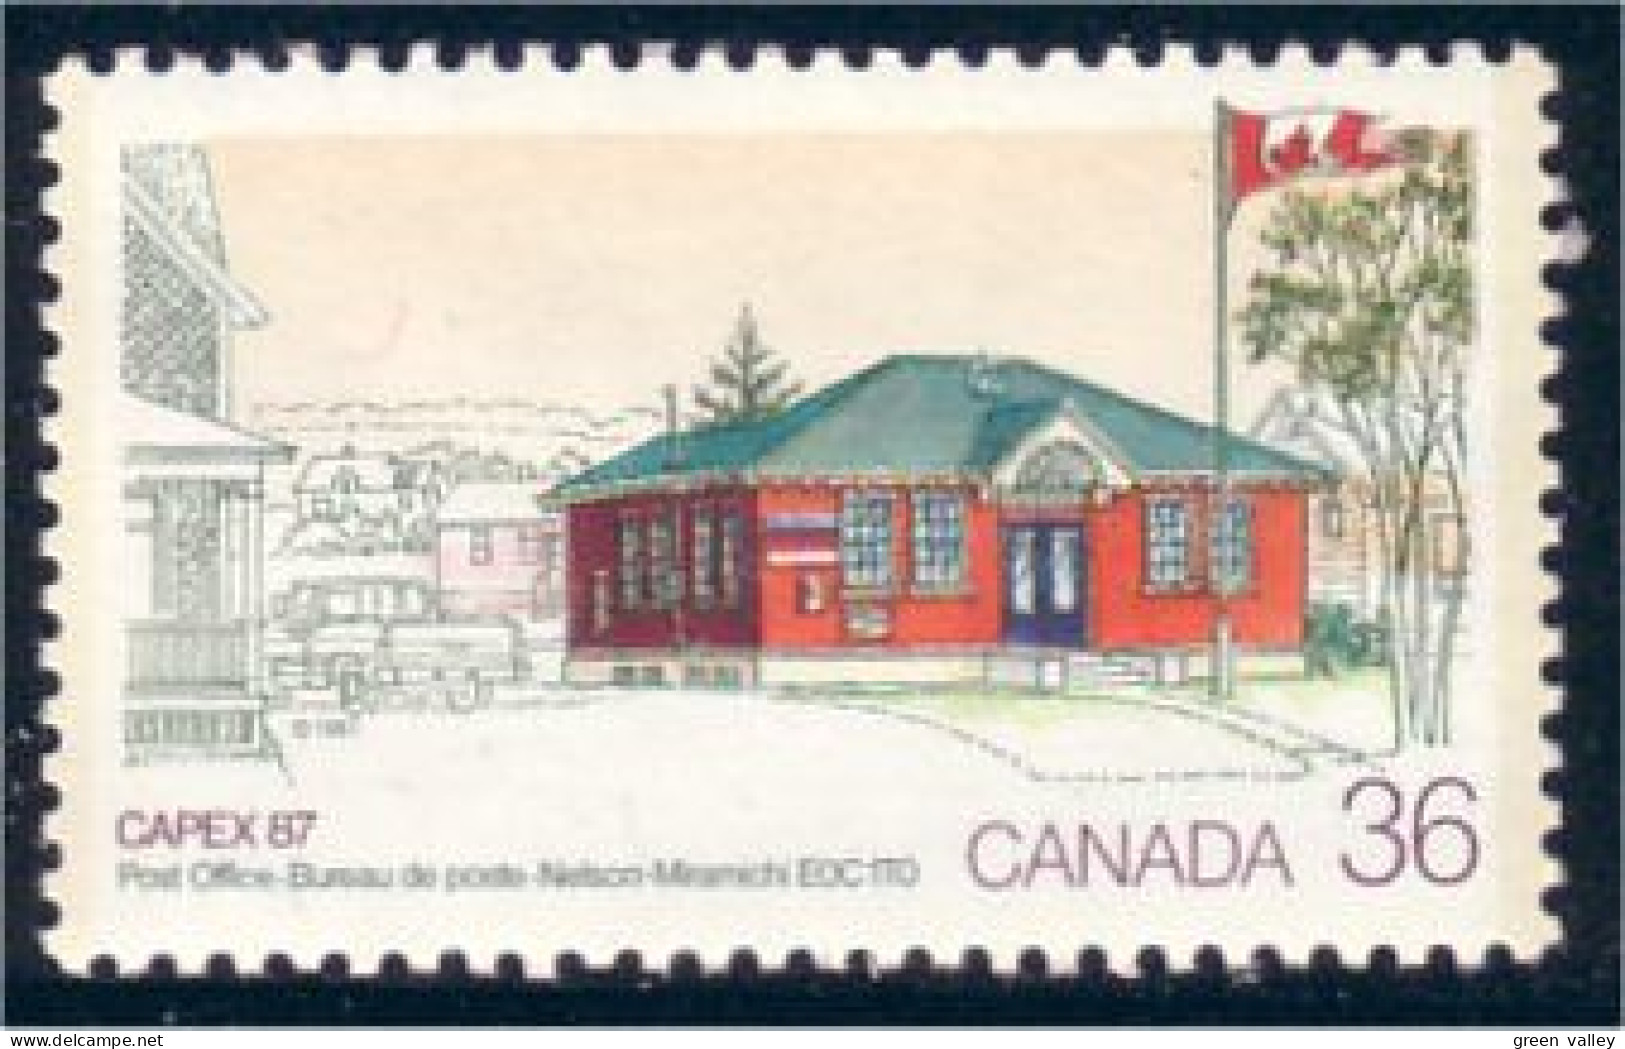 Canada Miramichi Post Office MNH ** Neuf SC (C11-23a) - Neufs